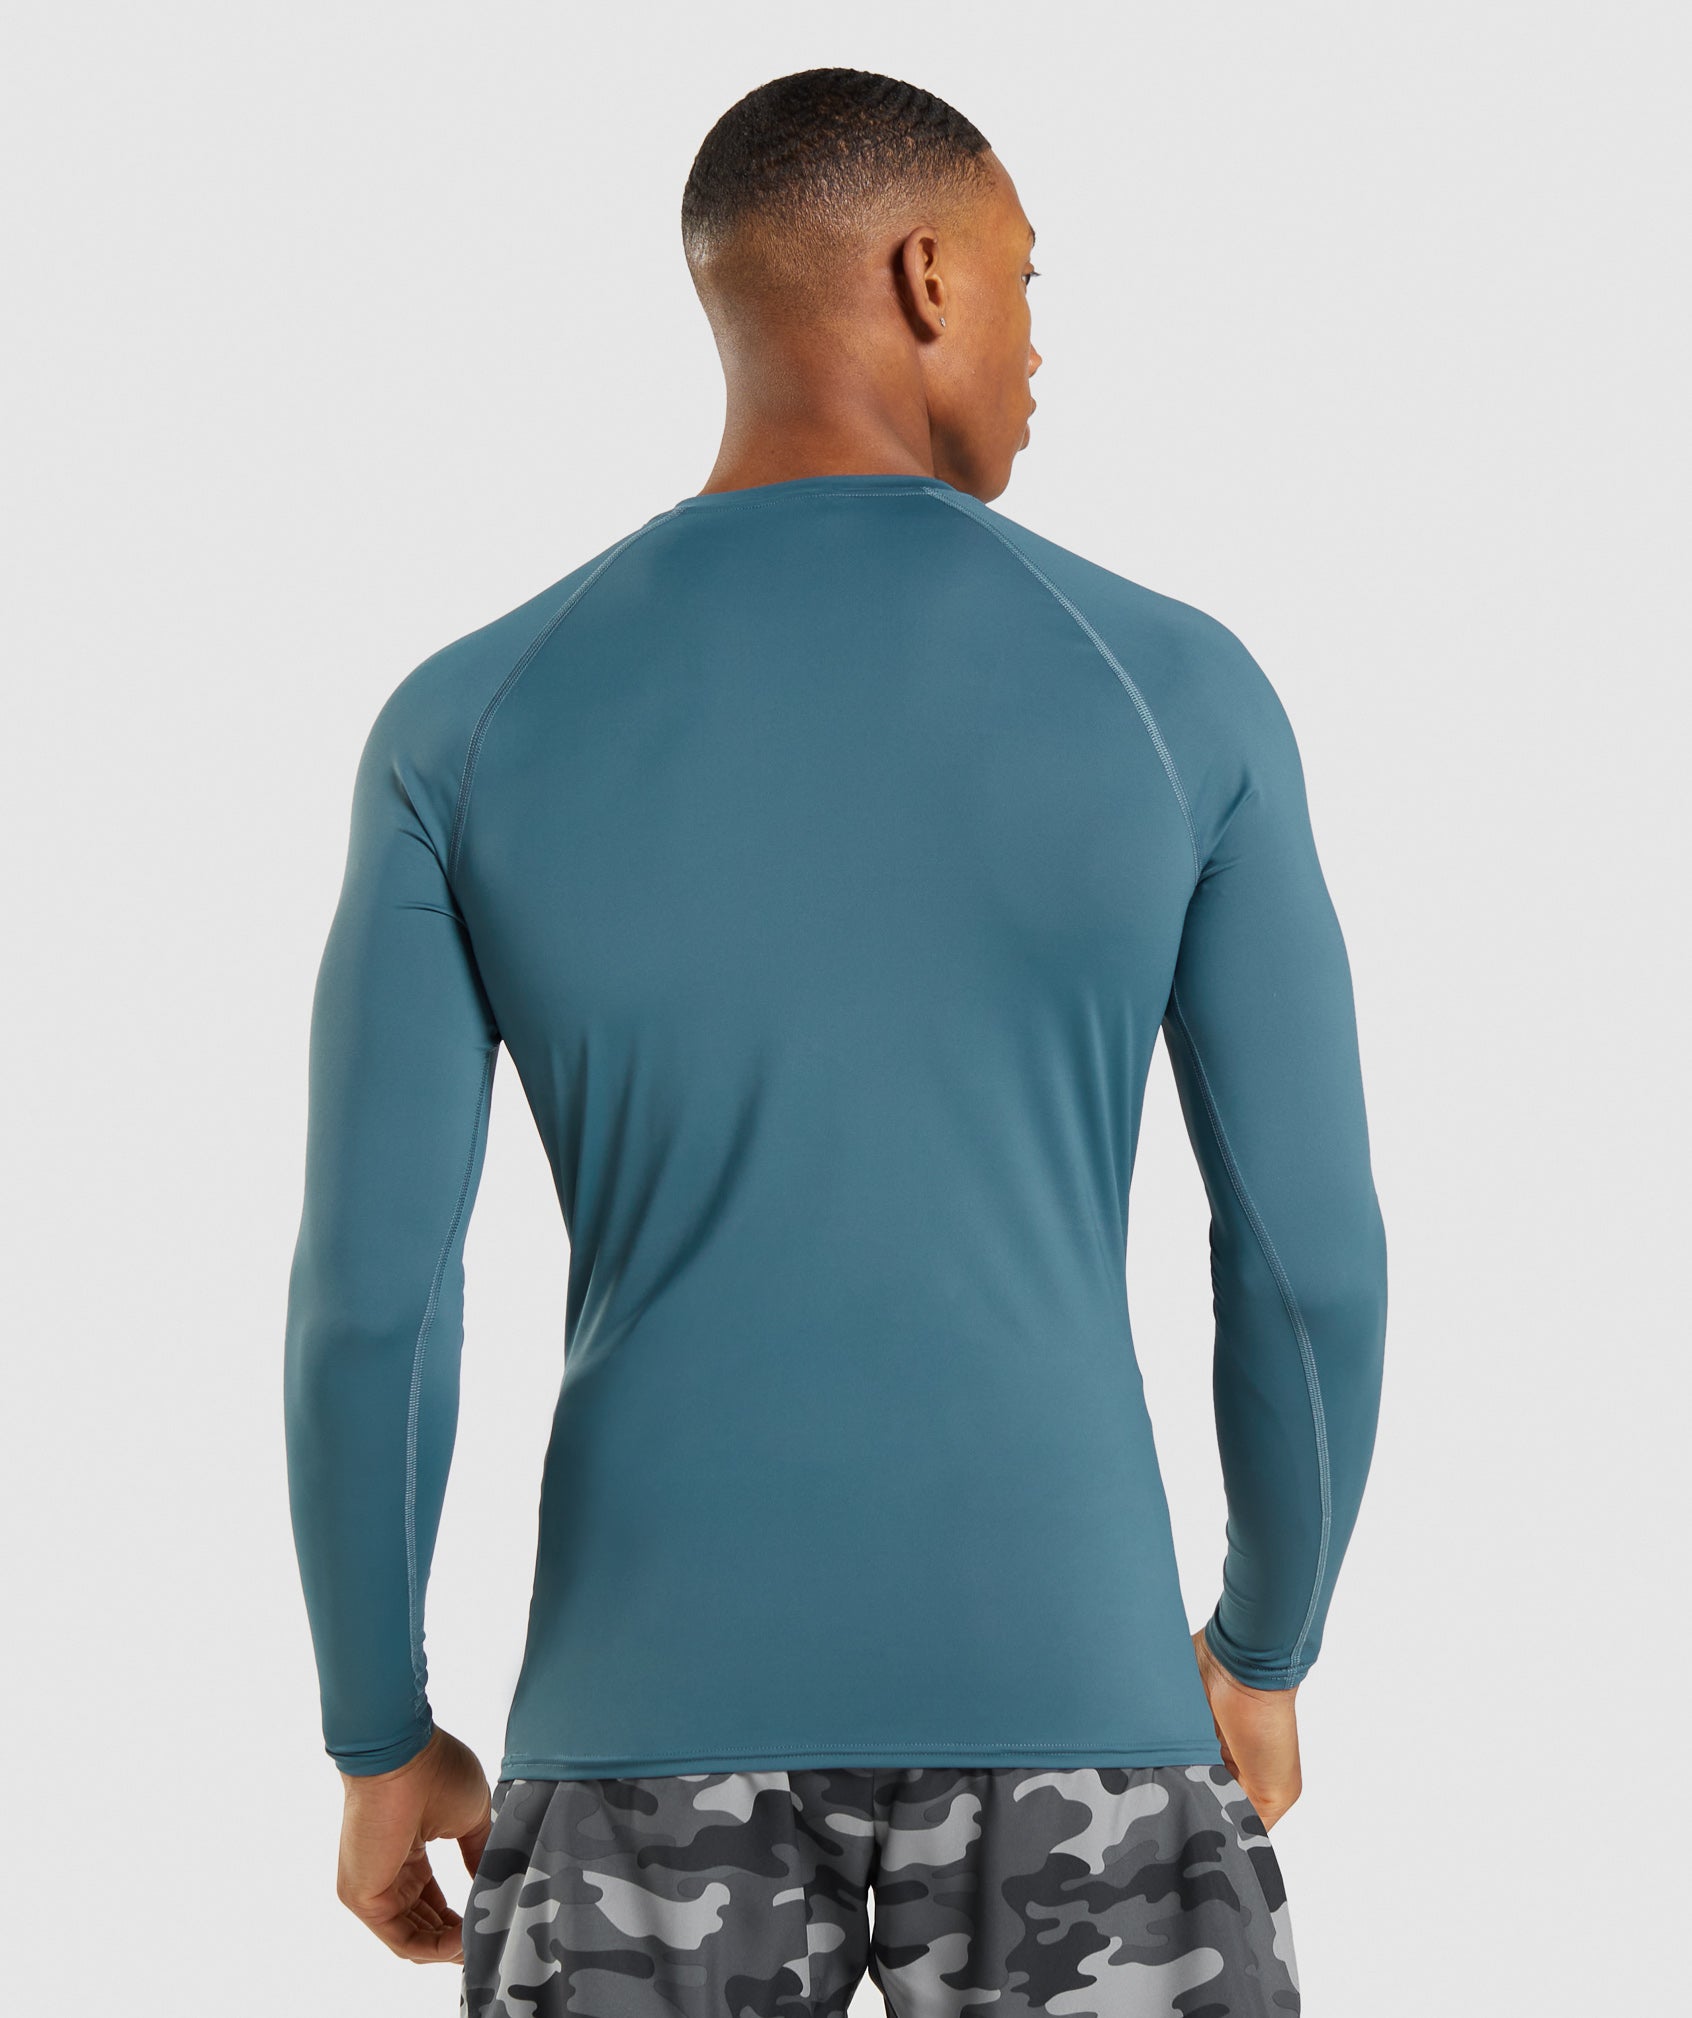 Gymshark Element Baselayer Long Sleeve T-Shirt - Tuscan Teal